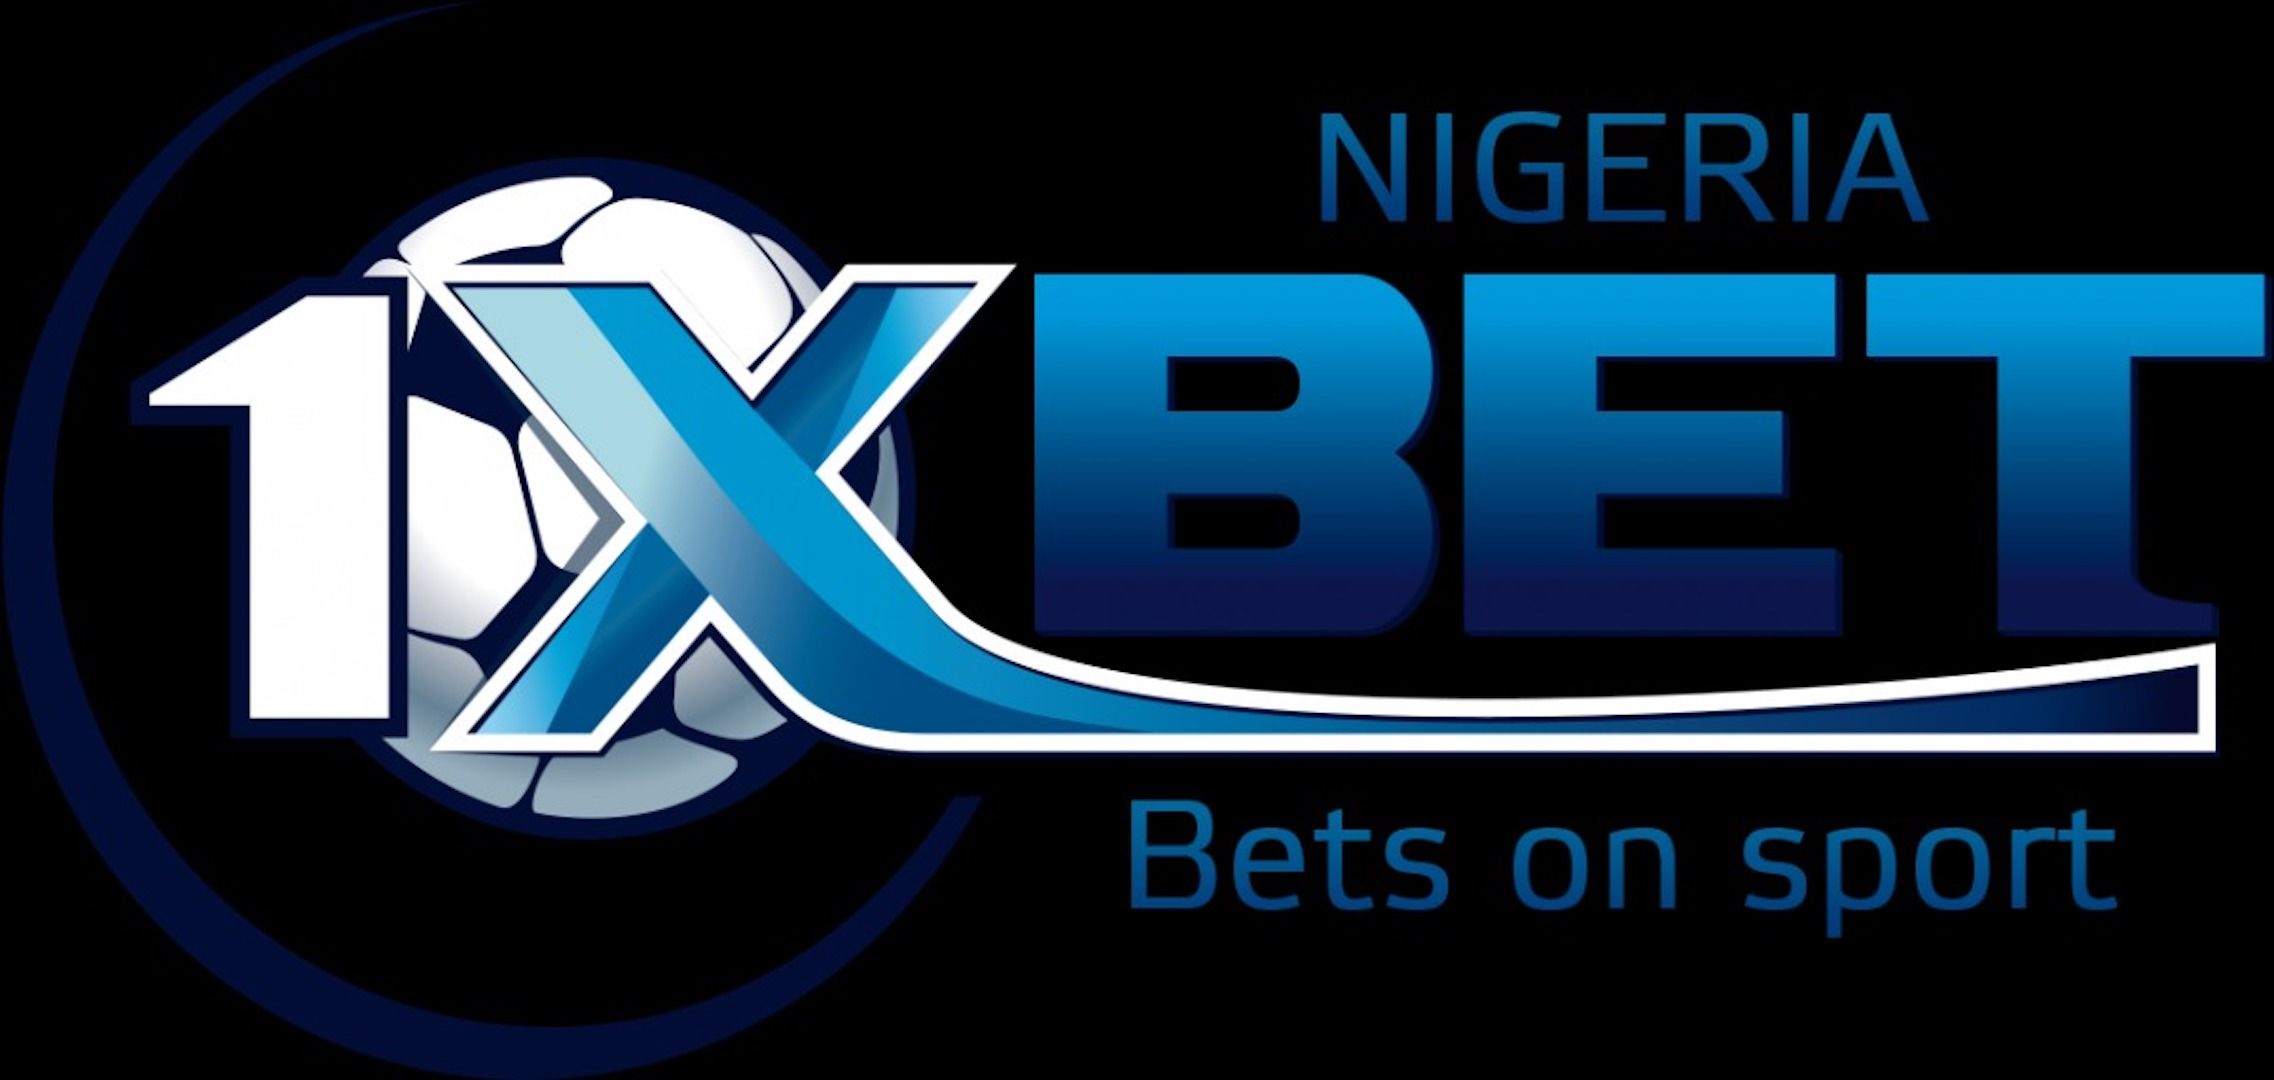 1xBet Nigeria Logo